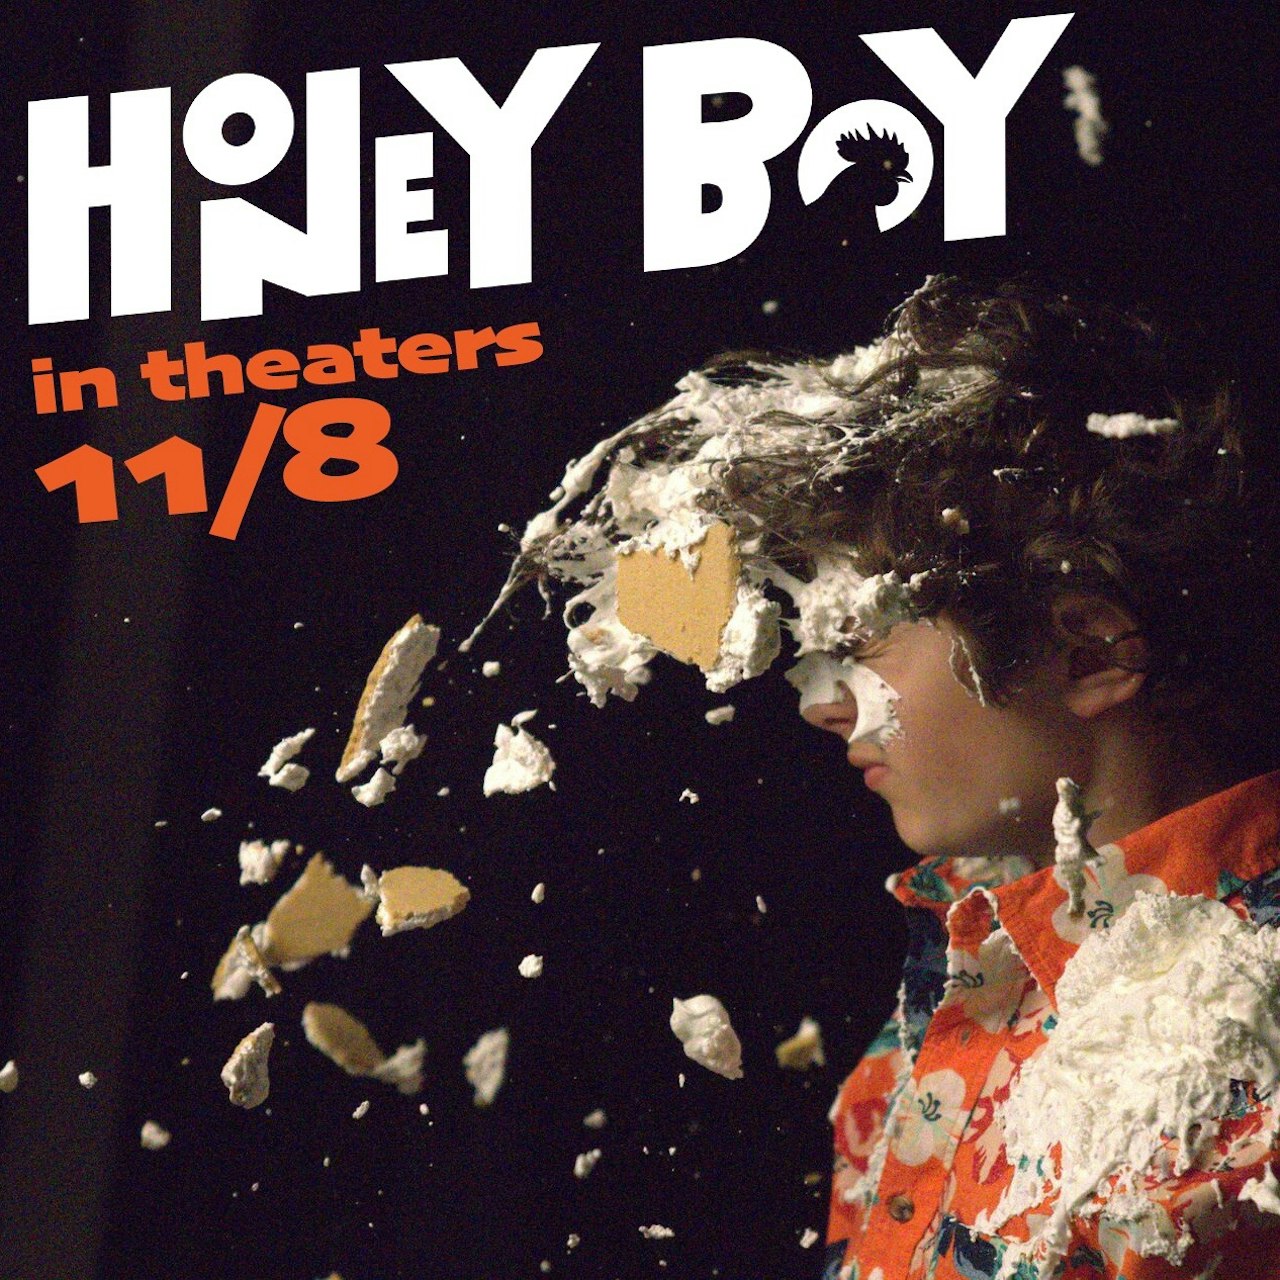 "Honey Boy" in theatres on November 8th.